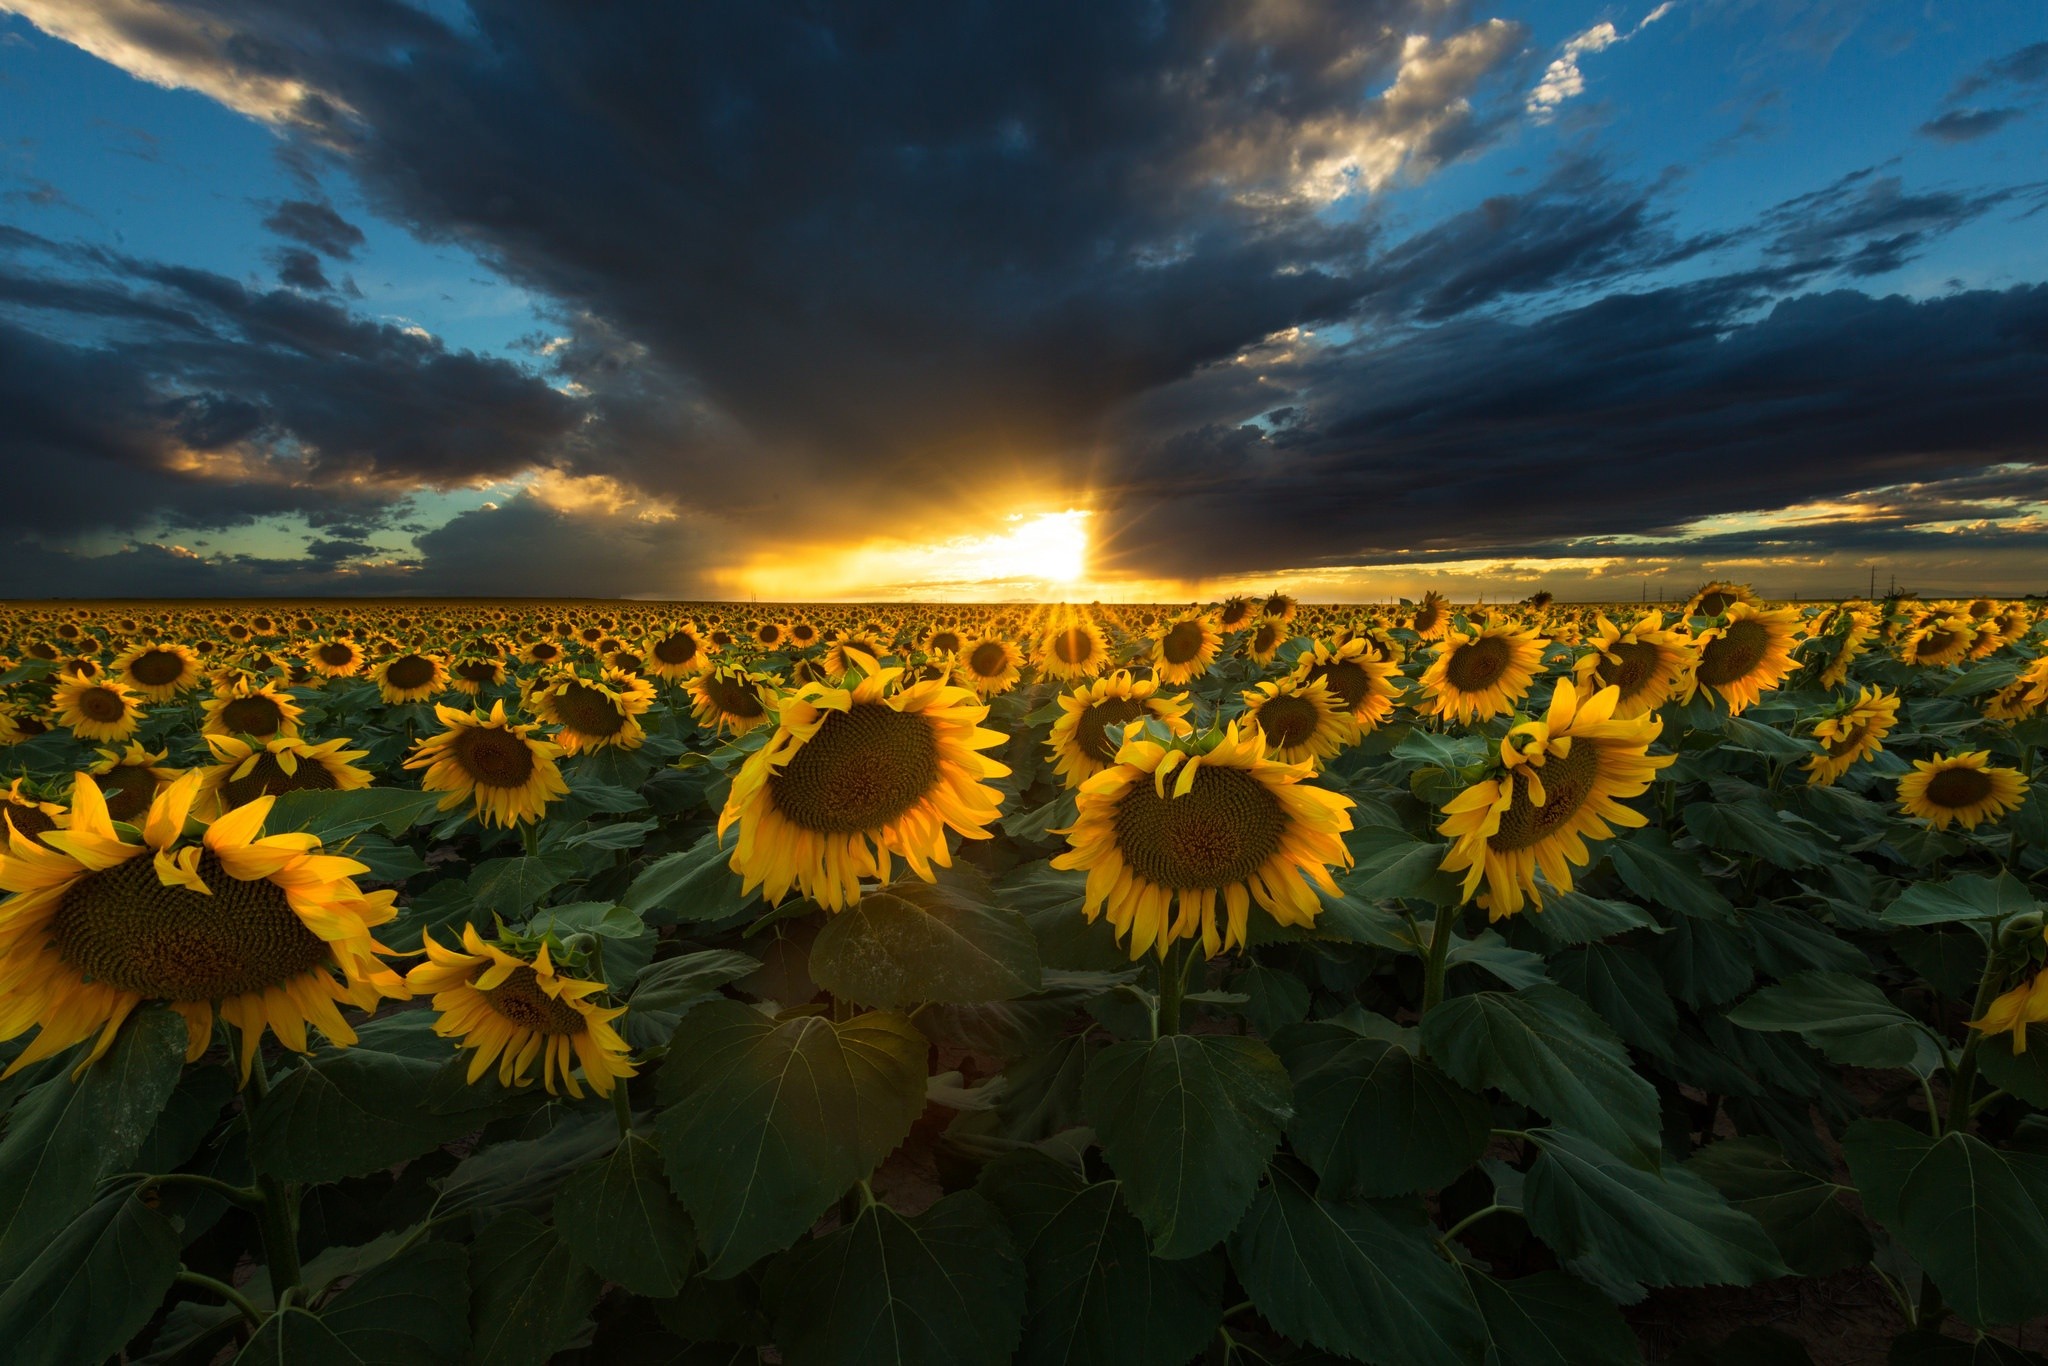 General 2048x1366 sunflowers Agro (Plants) field clouds landscape plants sunlight sky outdoors yellow flower